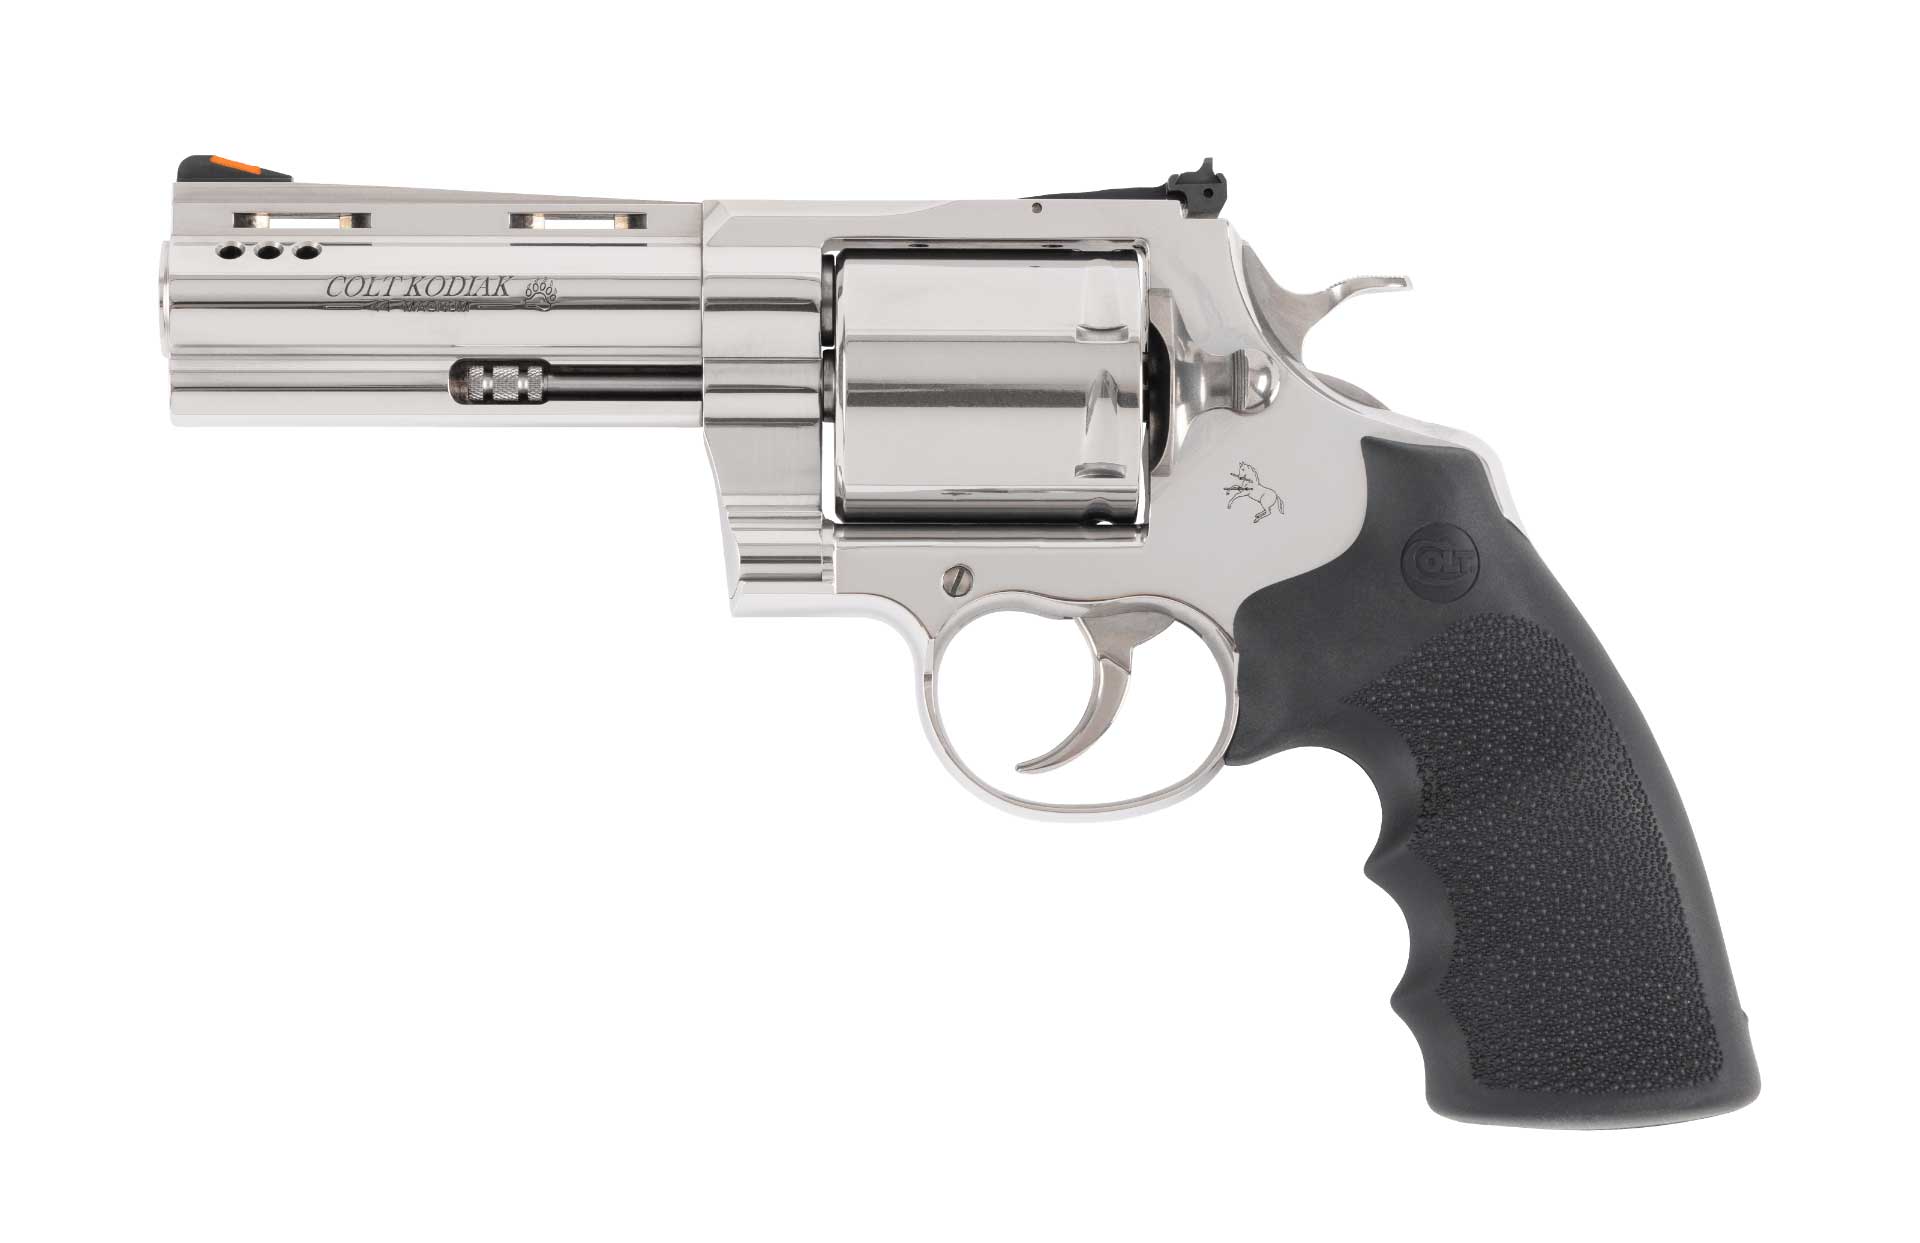 Left side of the Colt Kodiak revolver on a white background.